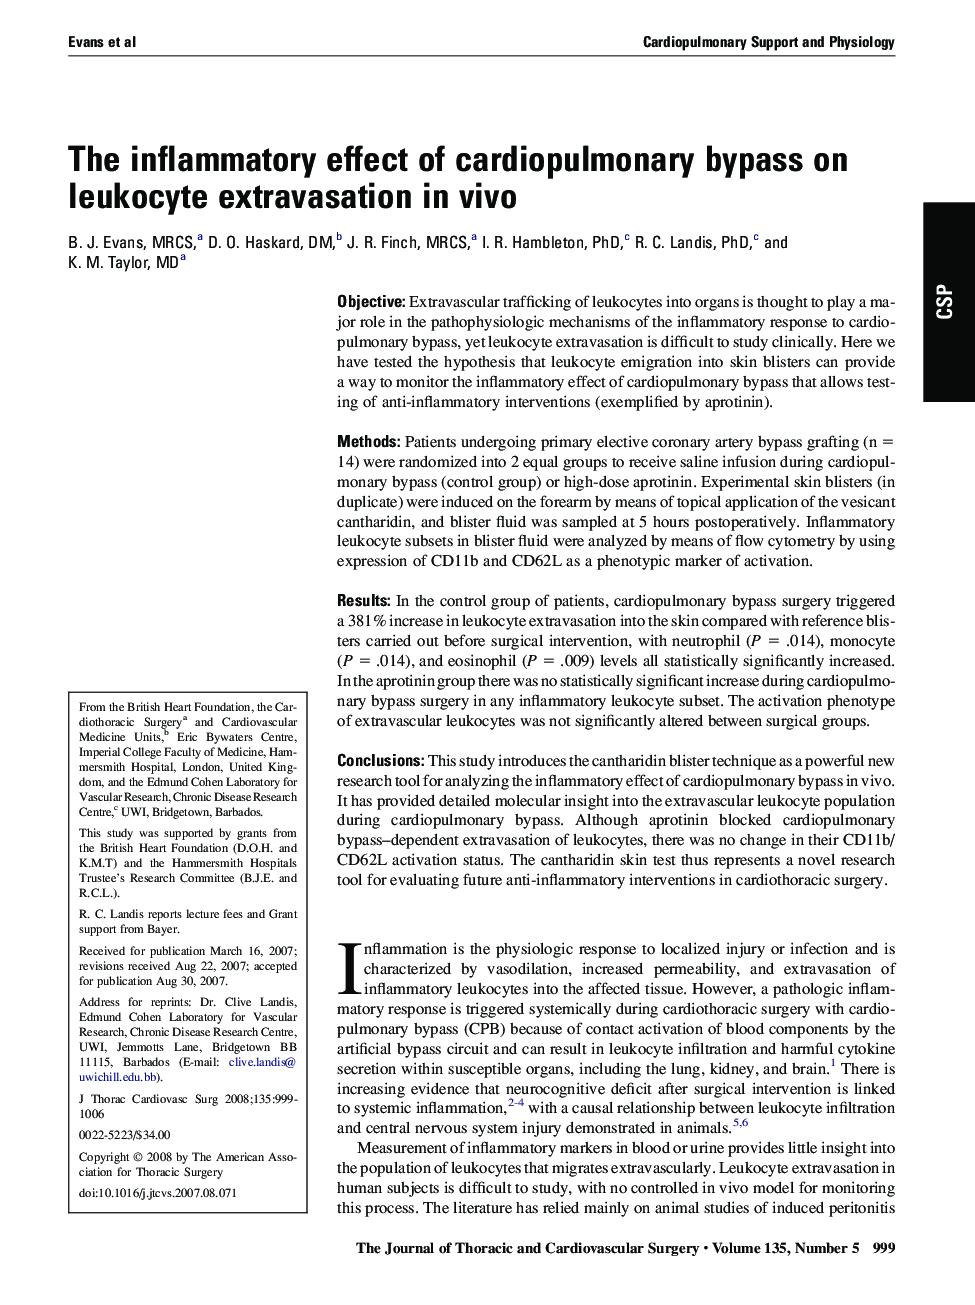 The inflammatory effect of cardiopulmonary bypass on leukocyte extravasation in vivo 